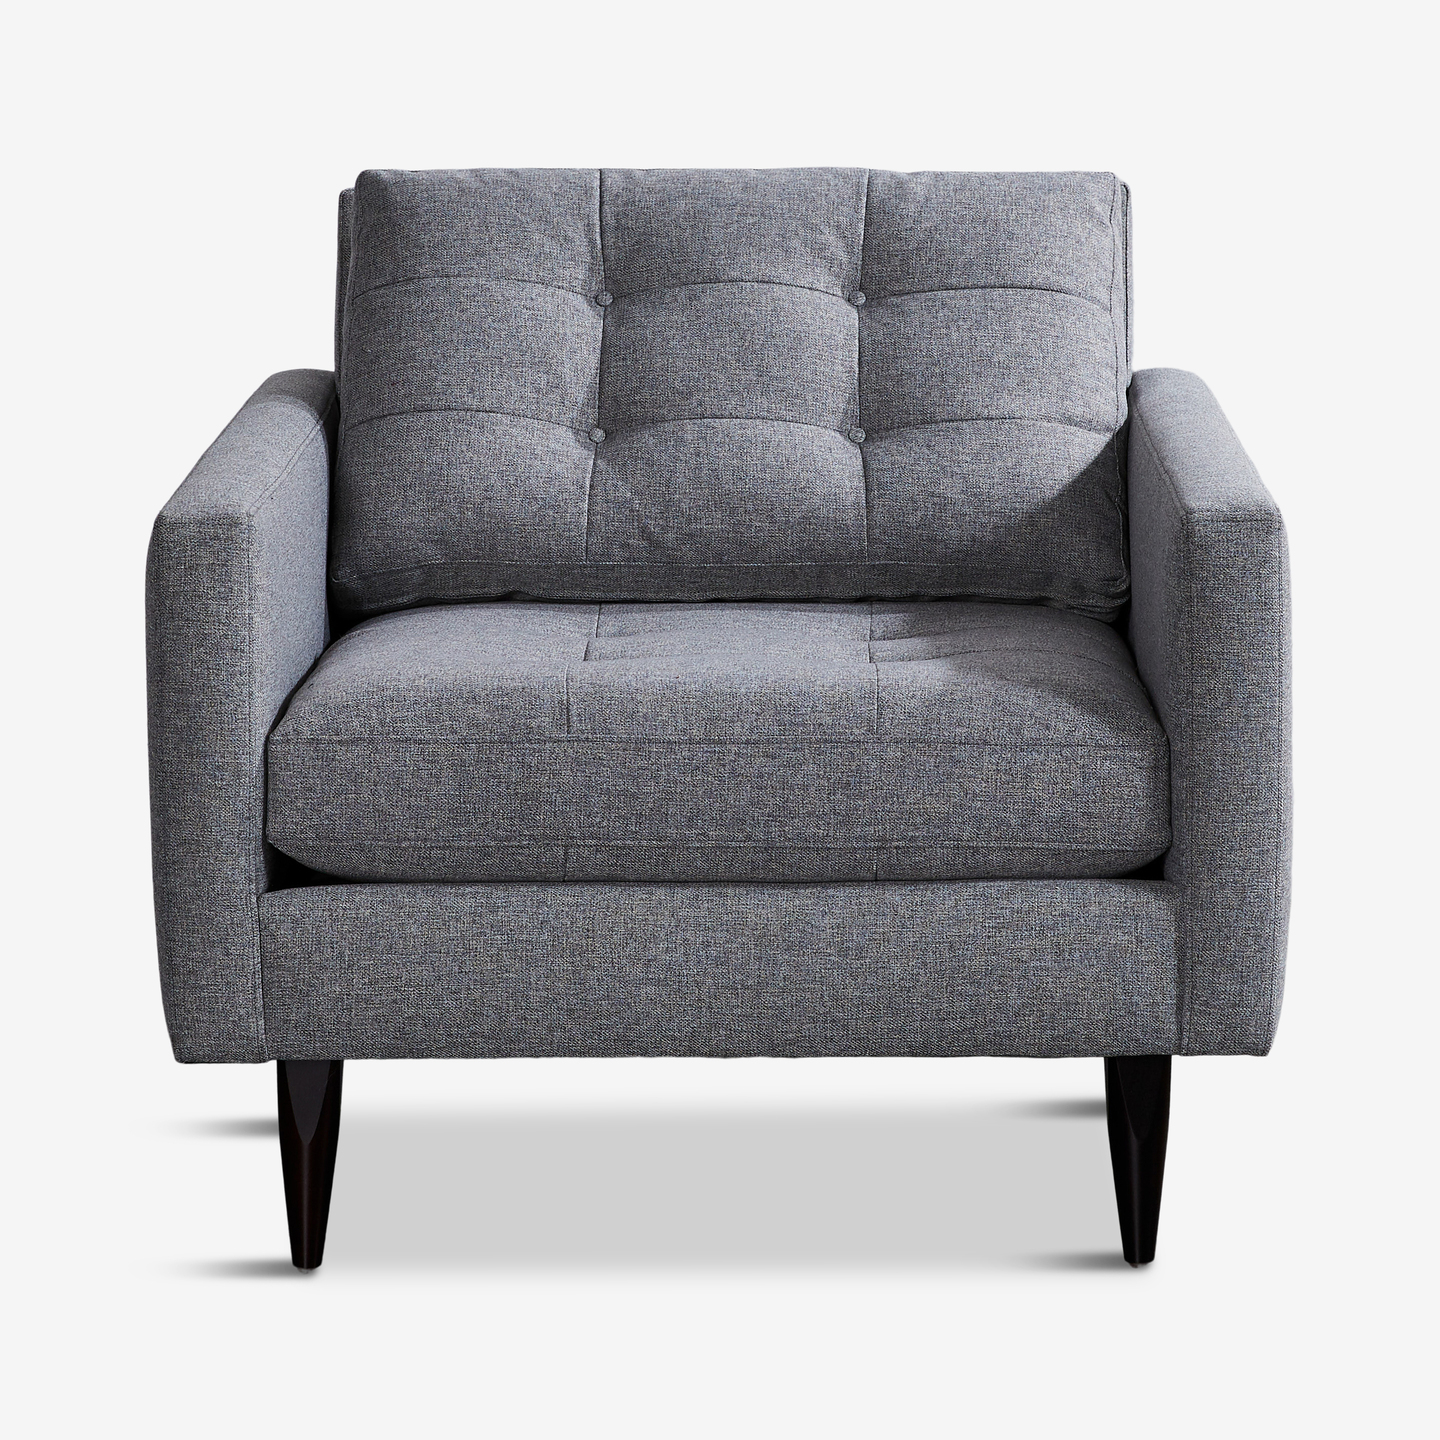 666_Petrie-Chair-Felt-Grey_Flat-Front_Mid-Century_Living-Room-2 2020